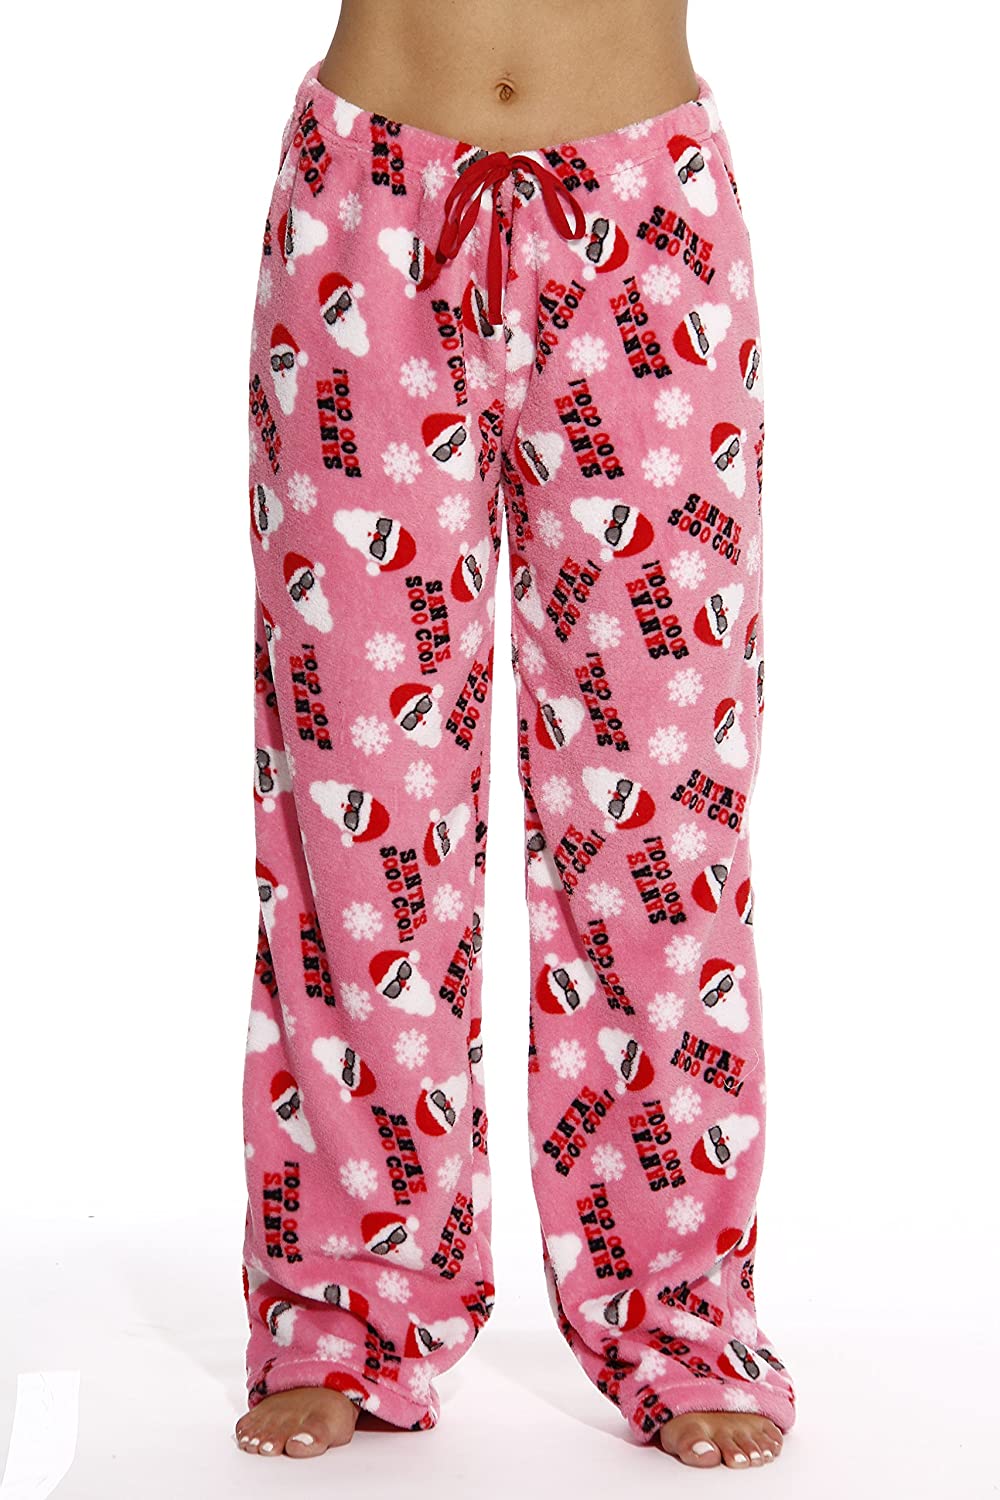 Just Love Women's Plush Pajama Pants - Cozy Lounge Sleepwear (Skulls, 2X  Plus) 